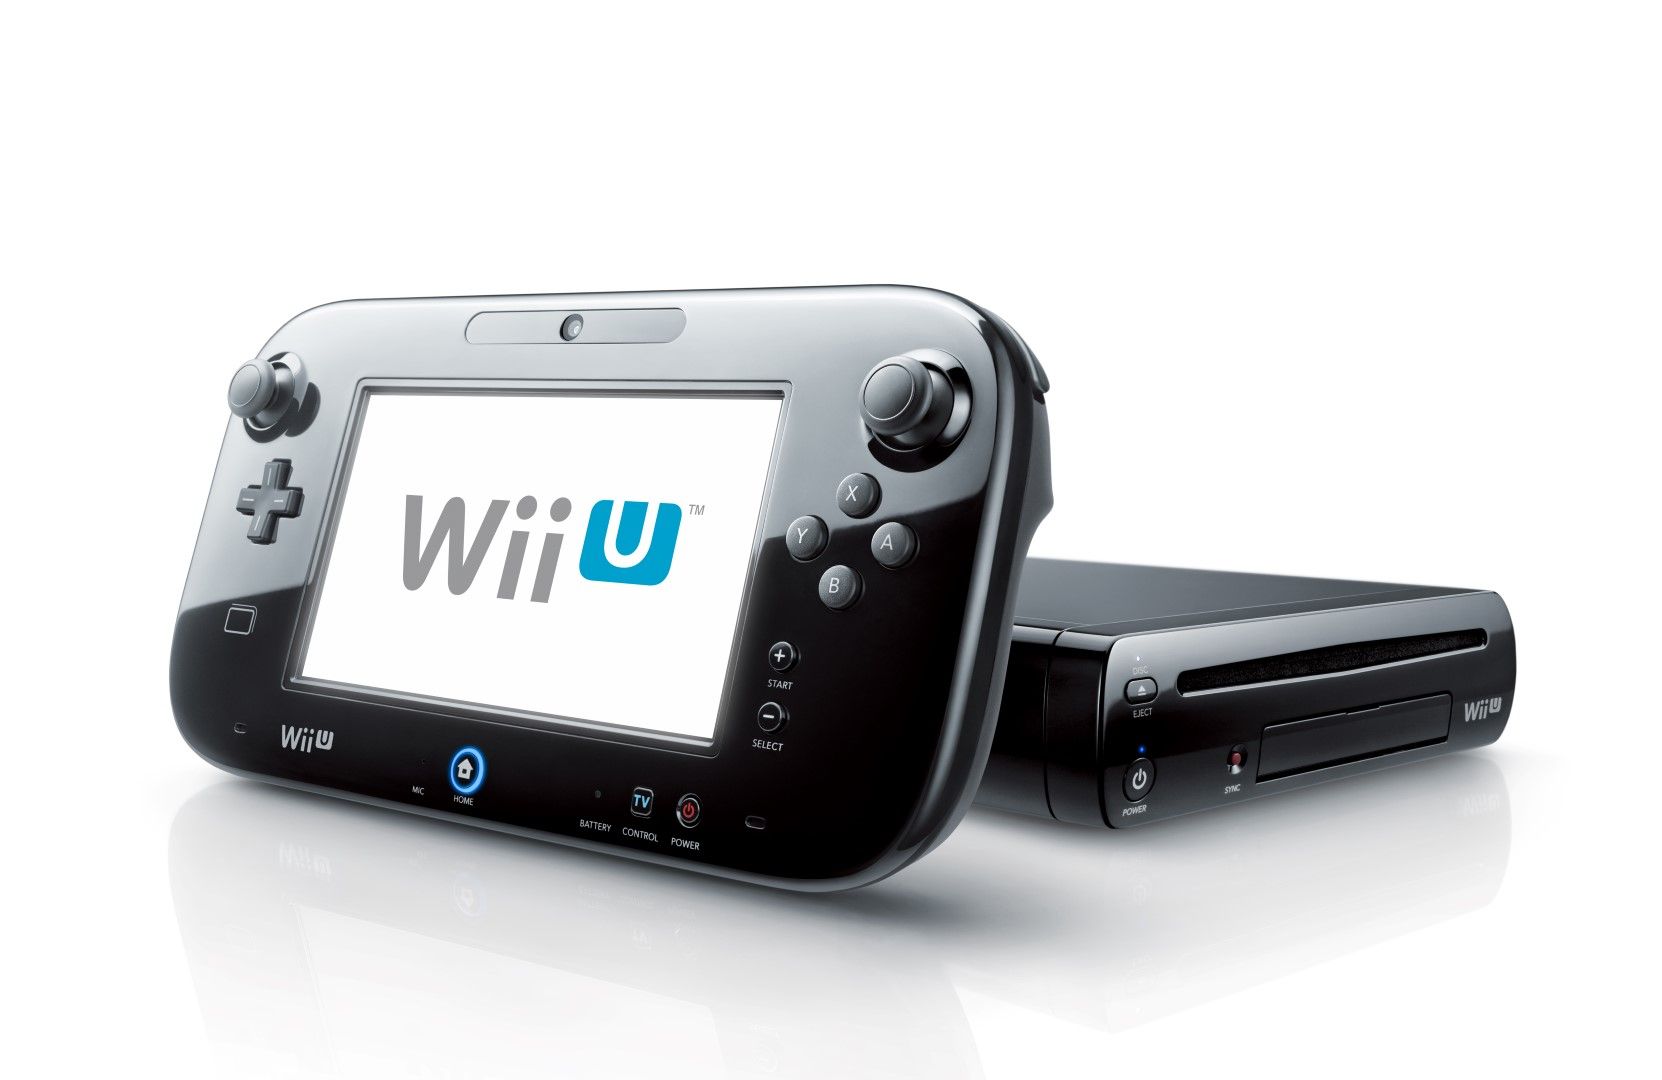  Nintendo Wii U 32GB Mario Kart 8 (Pre-Installed